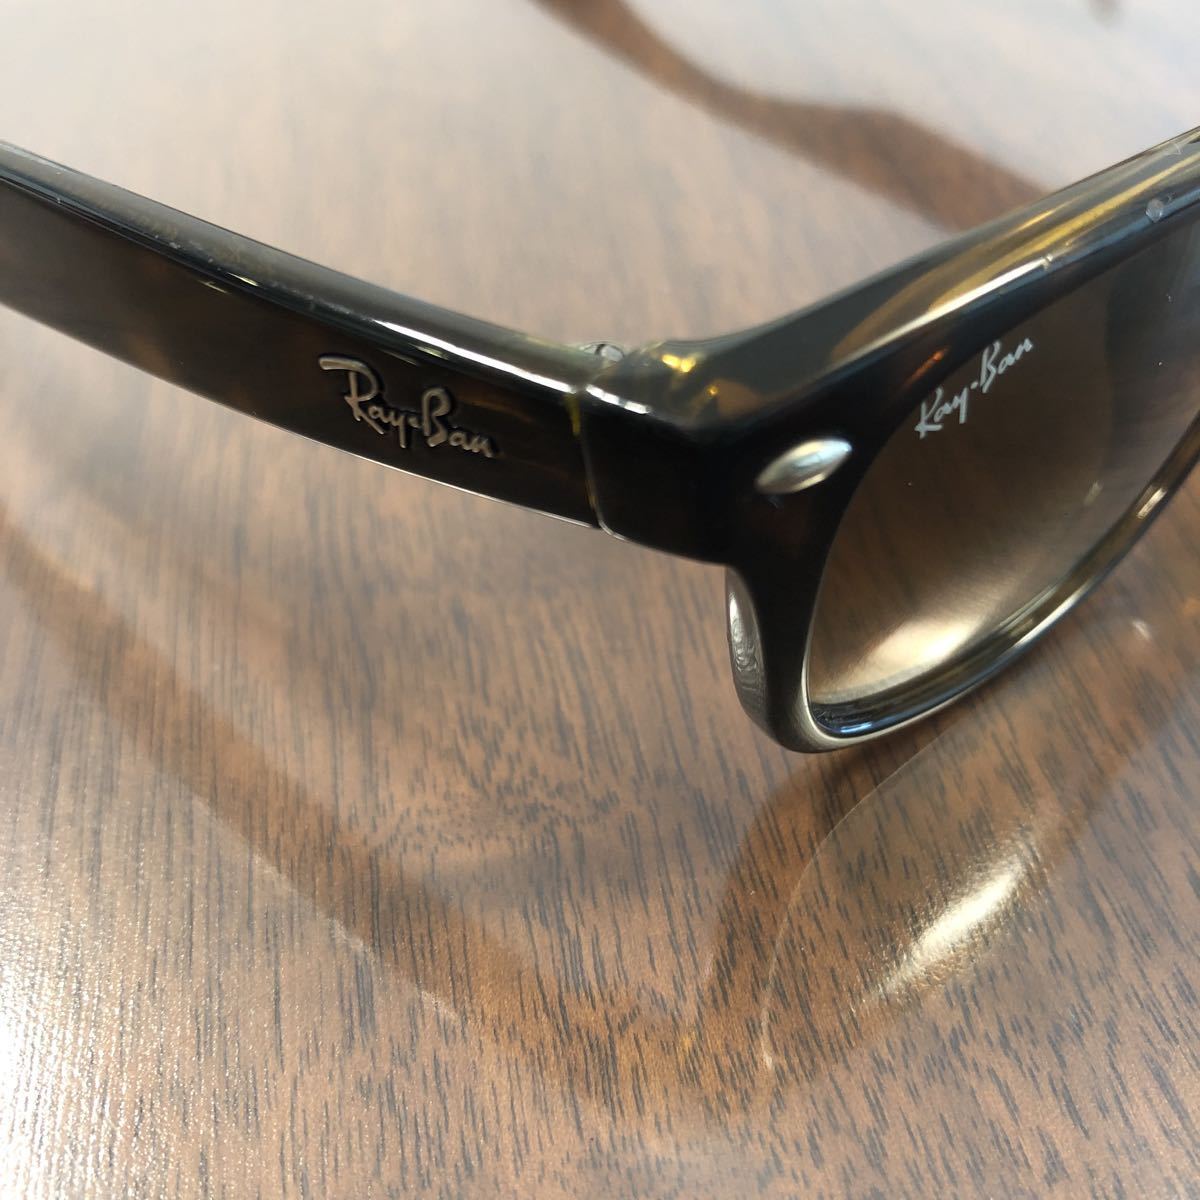  RayBan солнцезащитные очки Ray Ban Италия производства RB 2132-F NEW WAYFARER